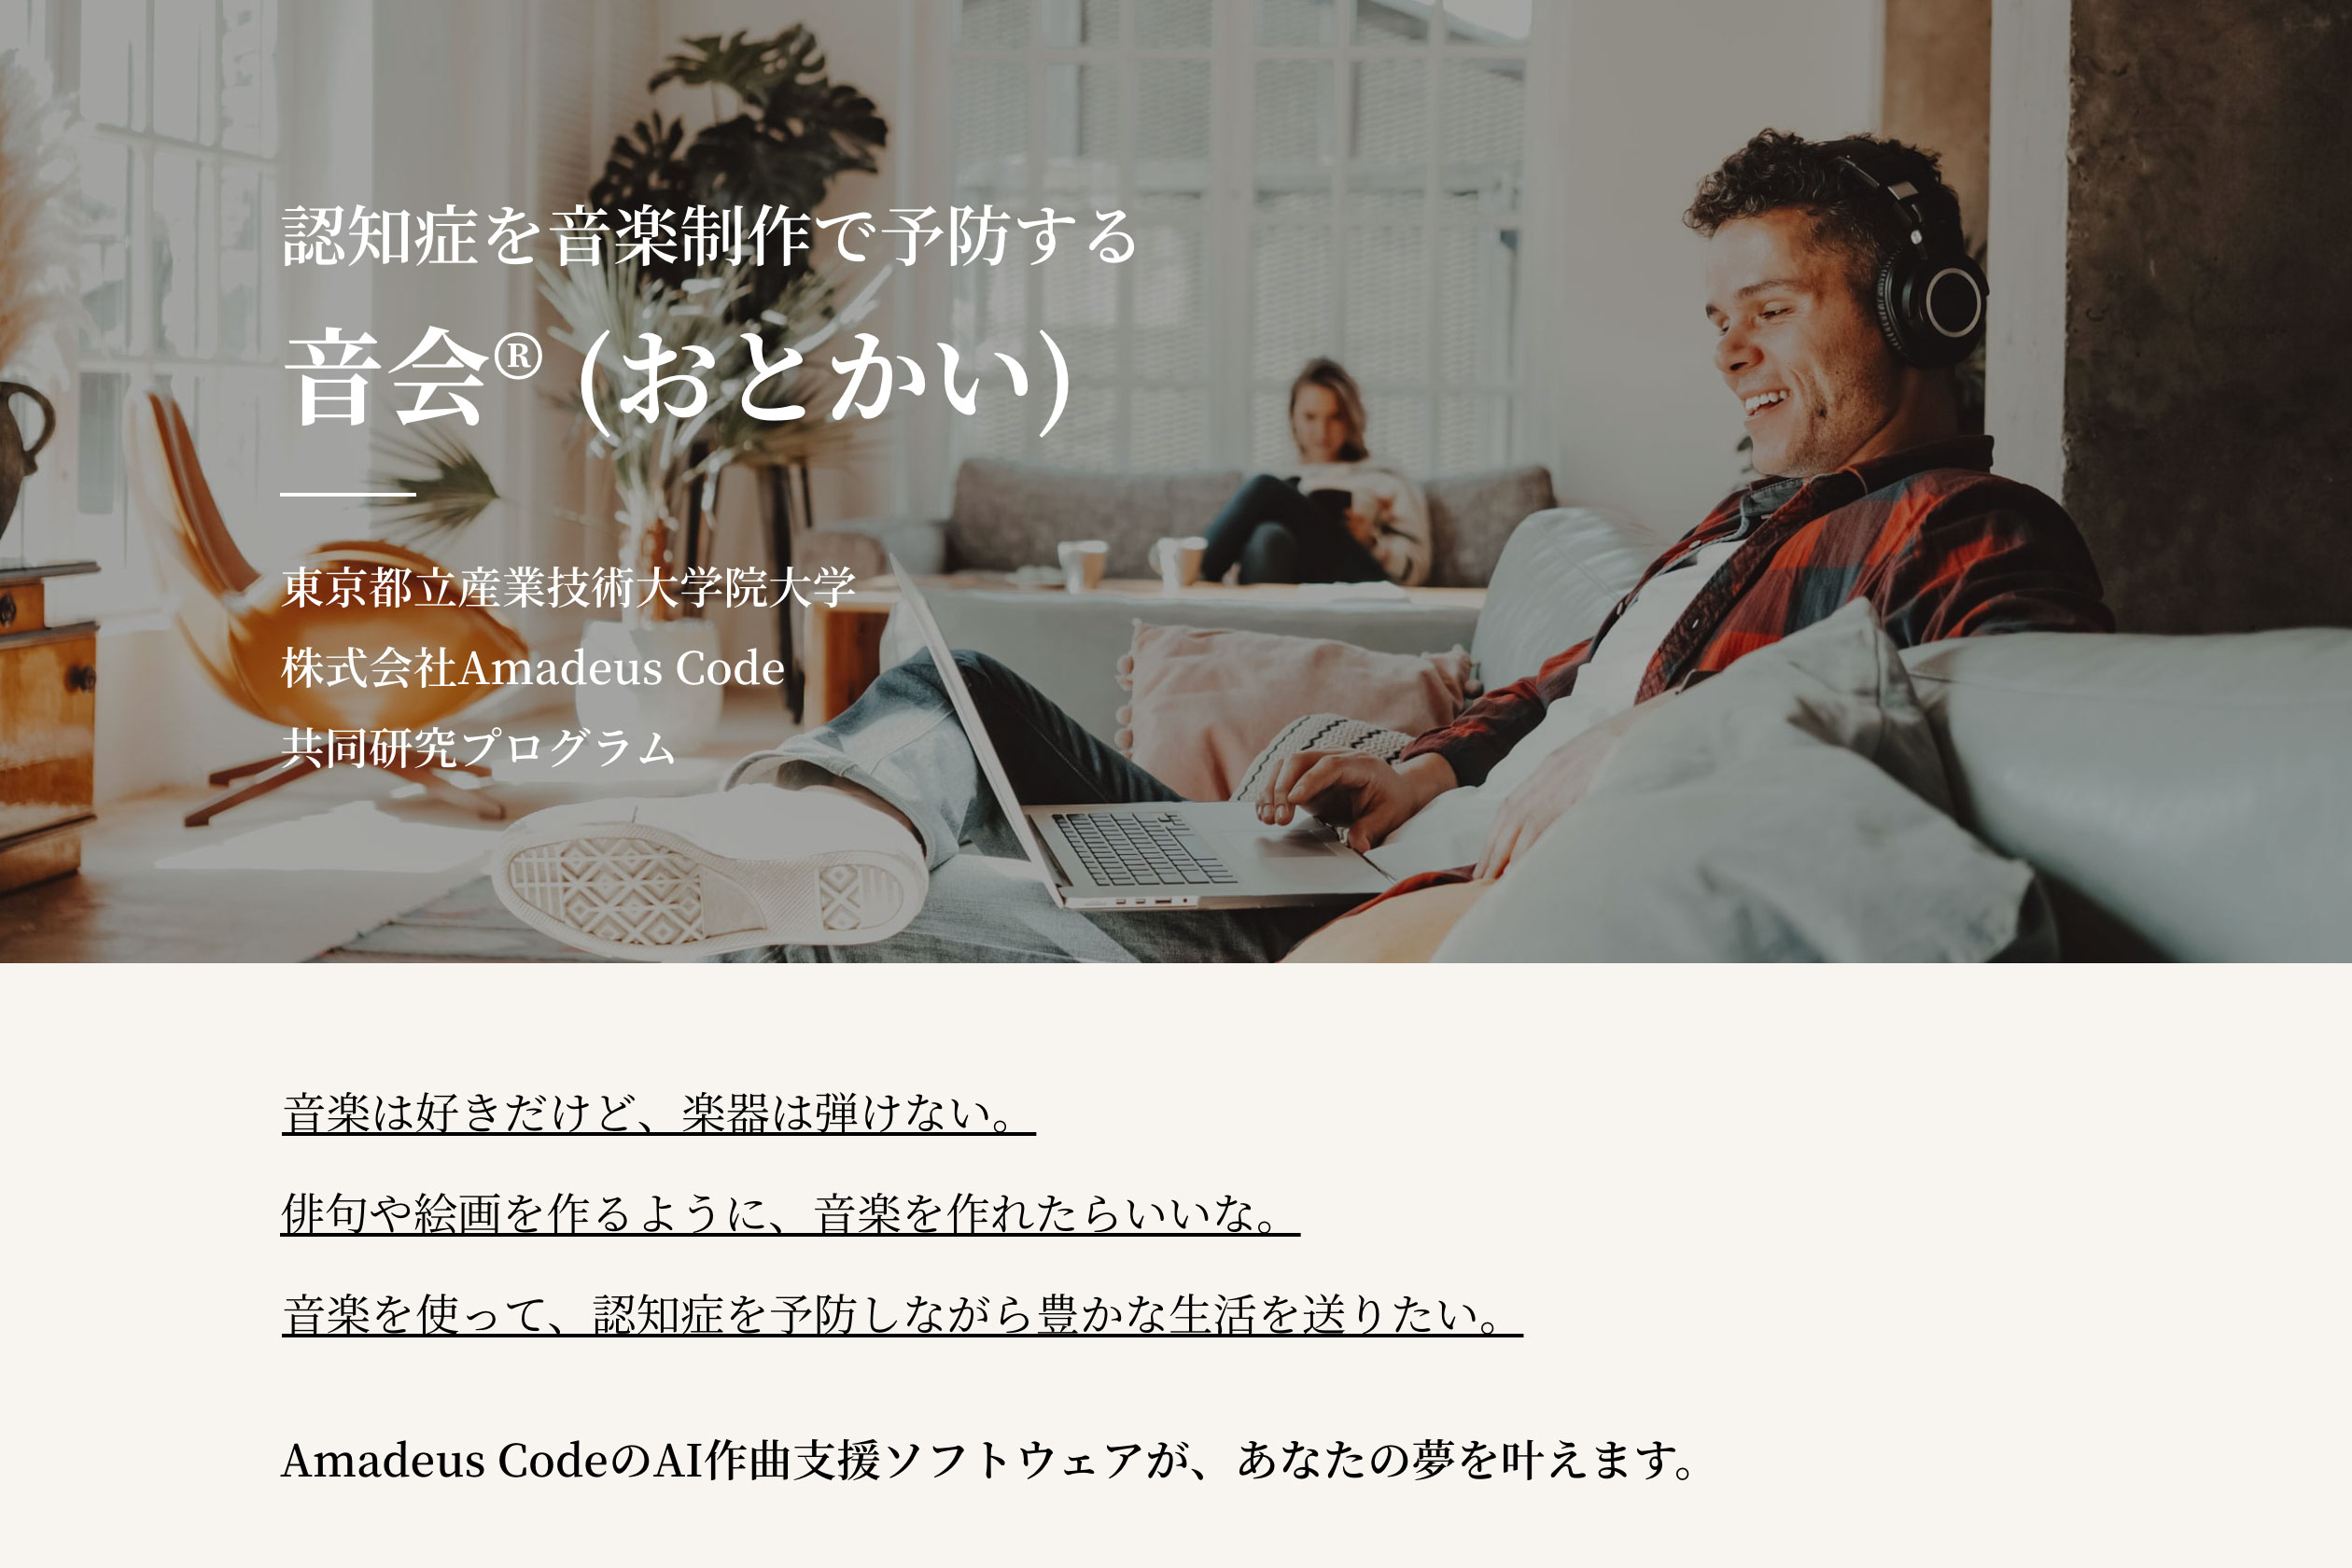 OtoKai Website Image